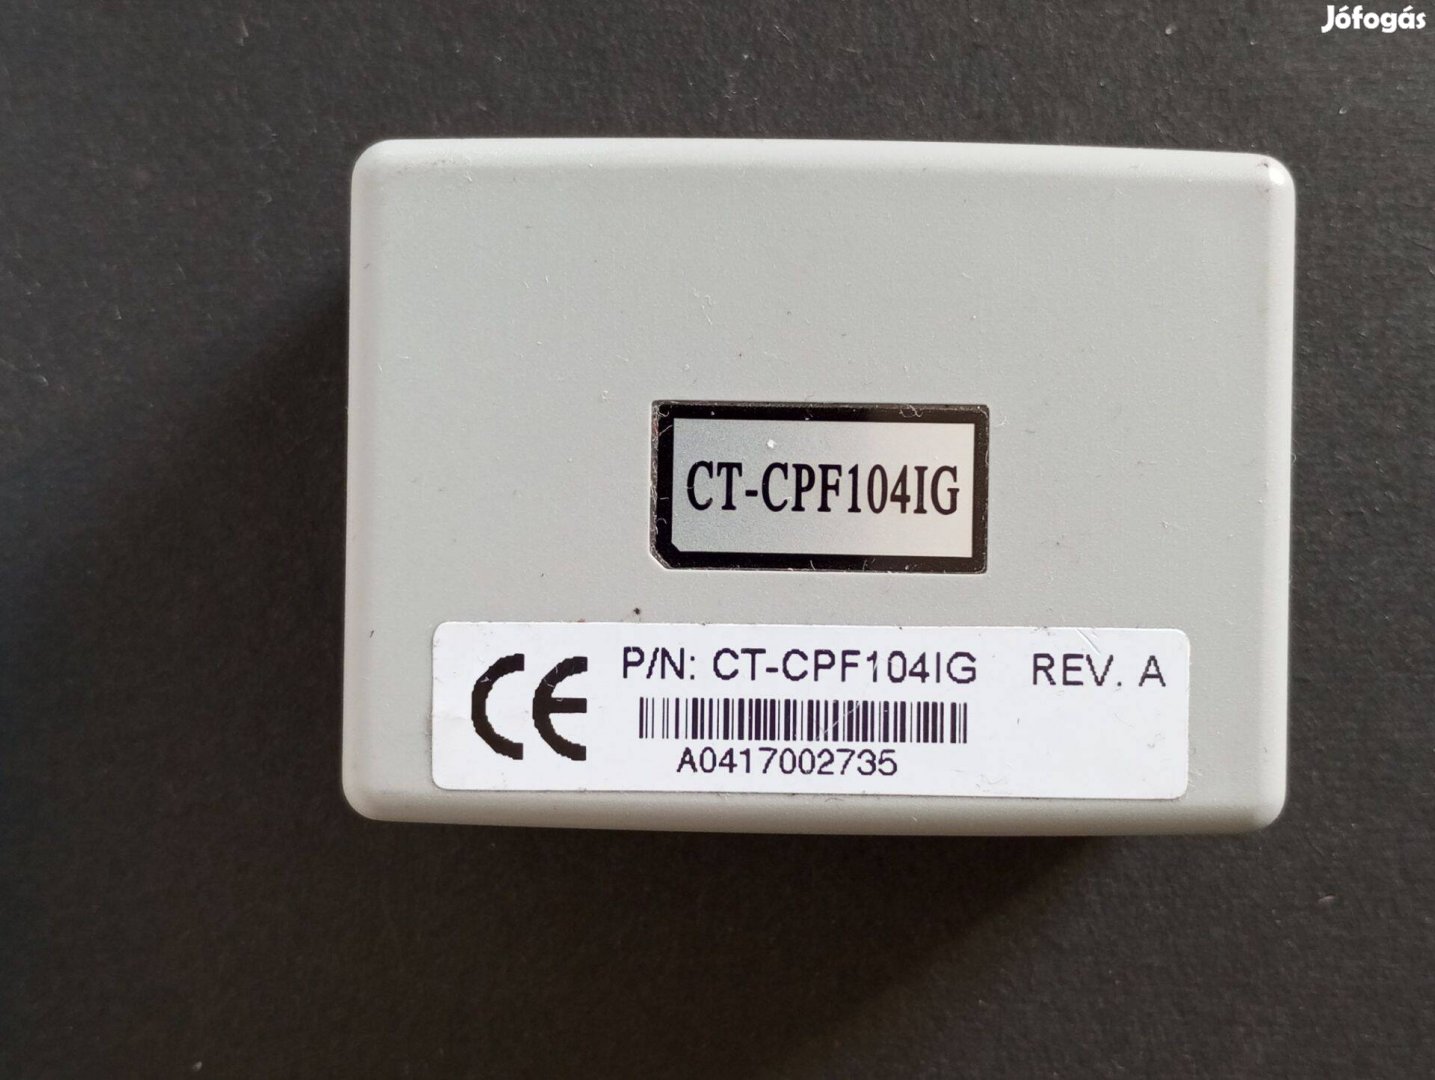 CPF 1041G POTS ISDN feletti kombinált splitter